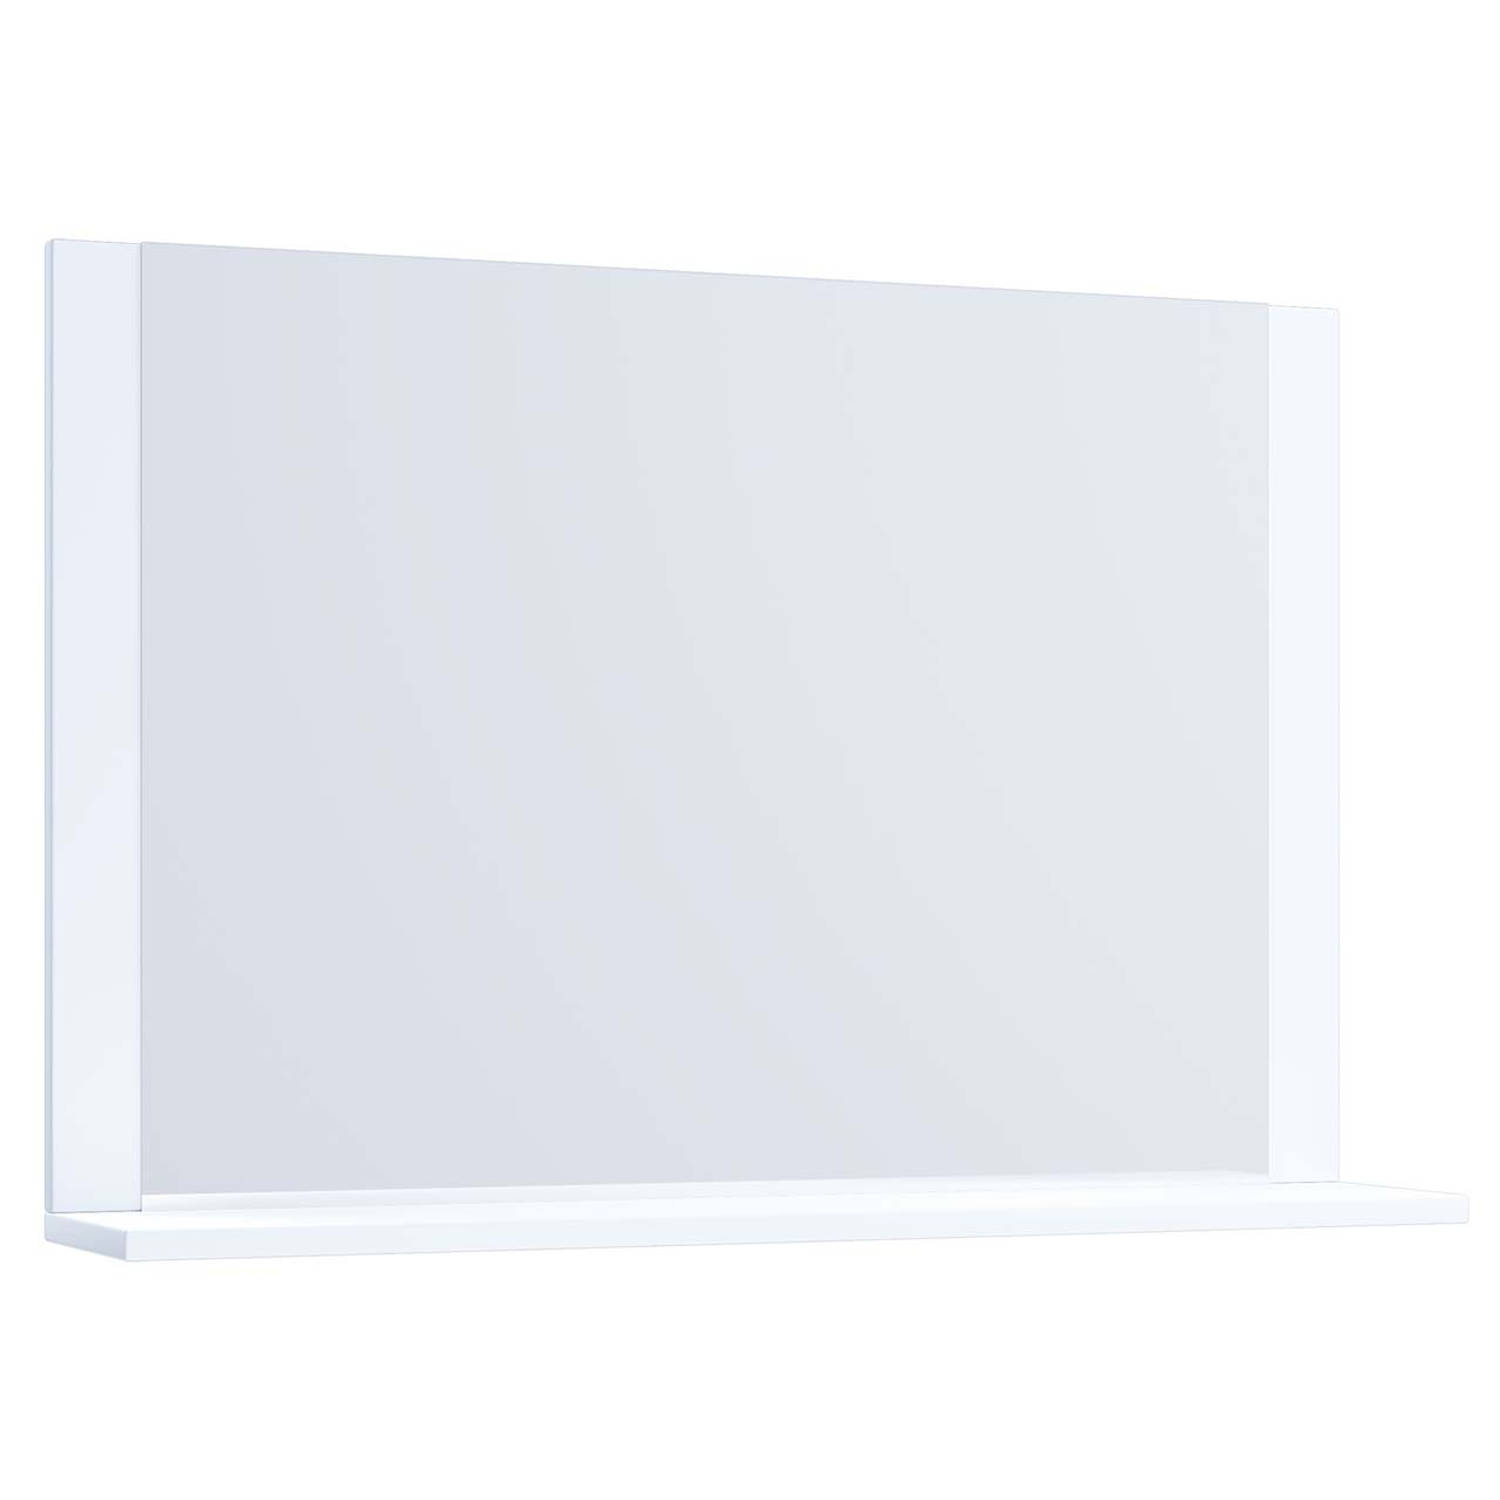 VCB10 Maxi spiegelkast , badkamerspiegel met 1 plank wit.